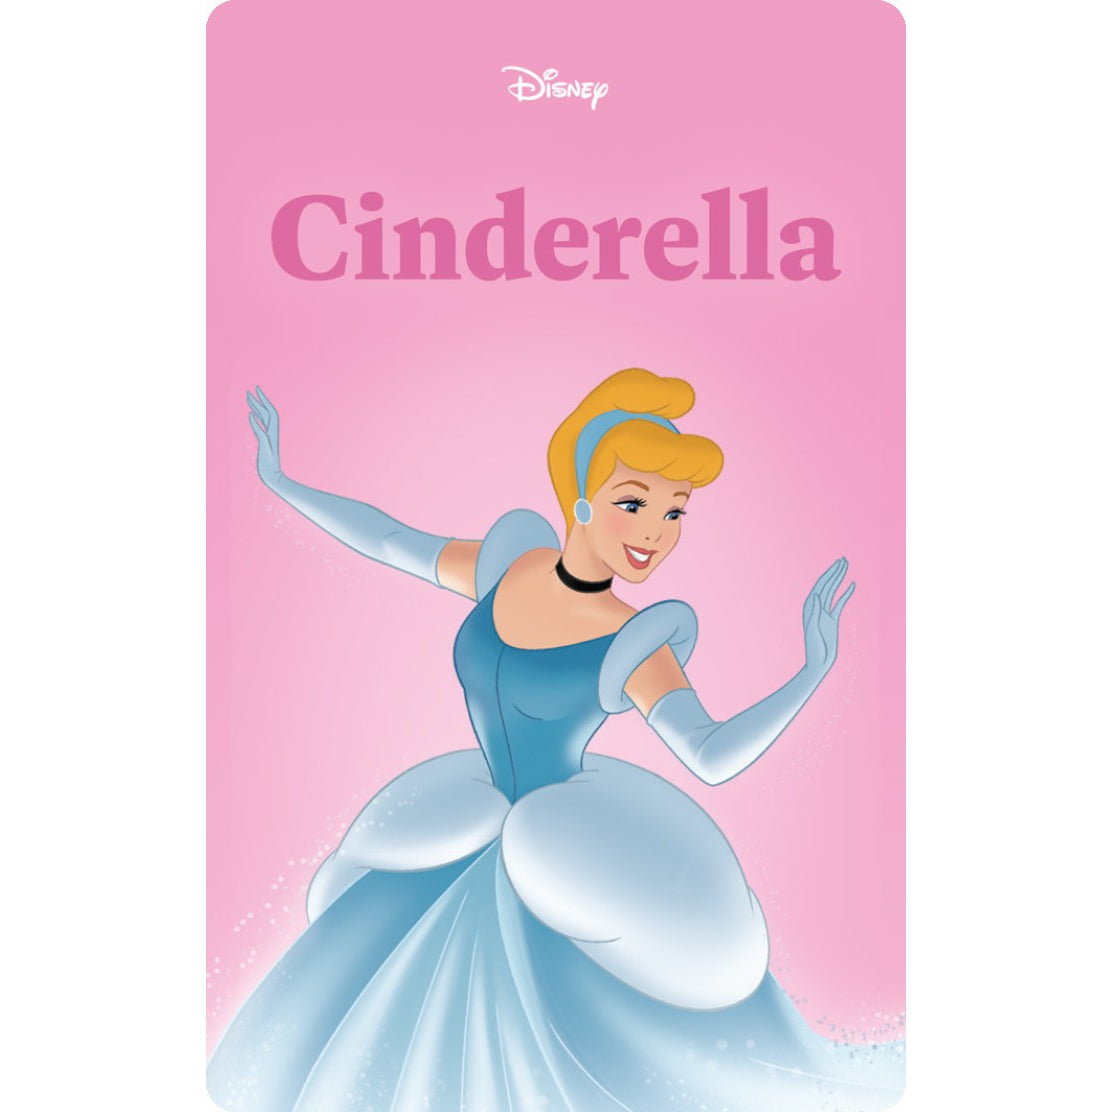 Yoto Card - Disney Classics: Cinderella - Child Friendly Audio Story Card for the Yoto Player